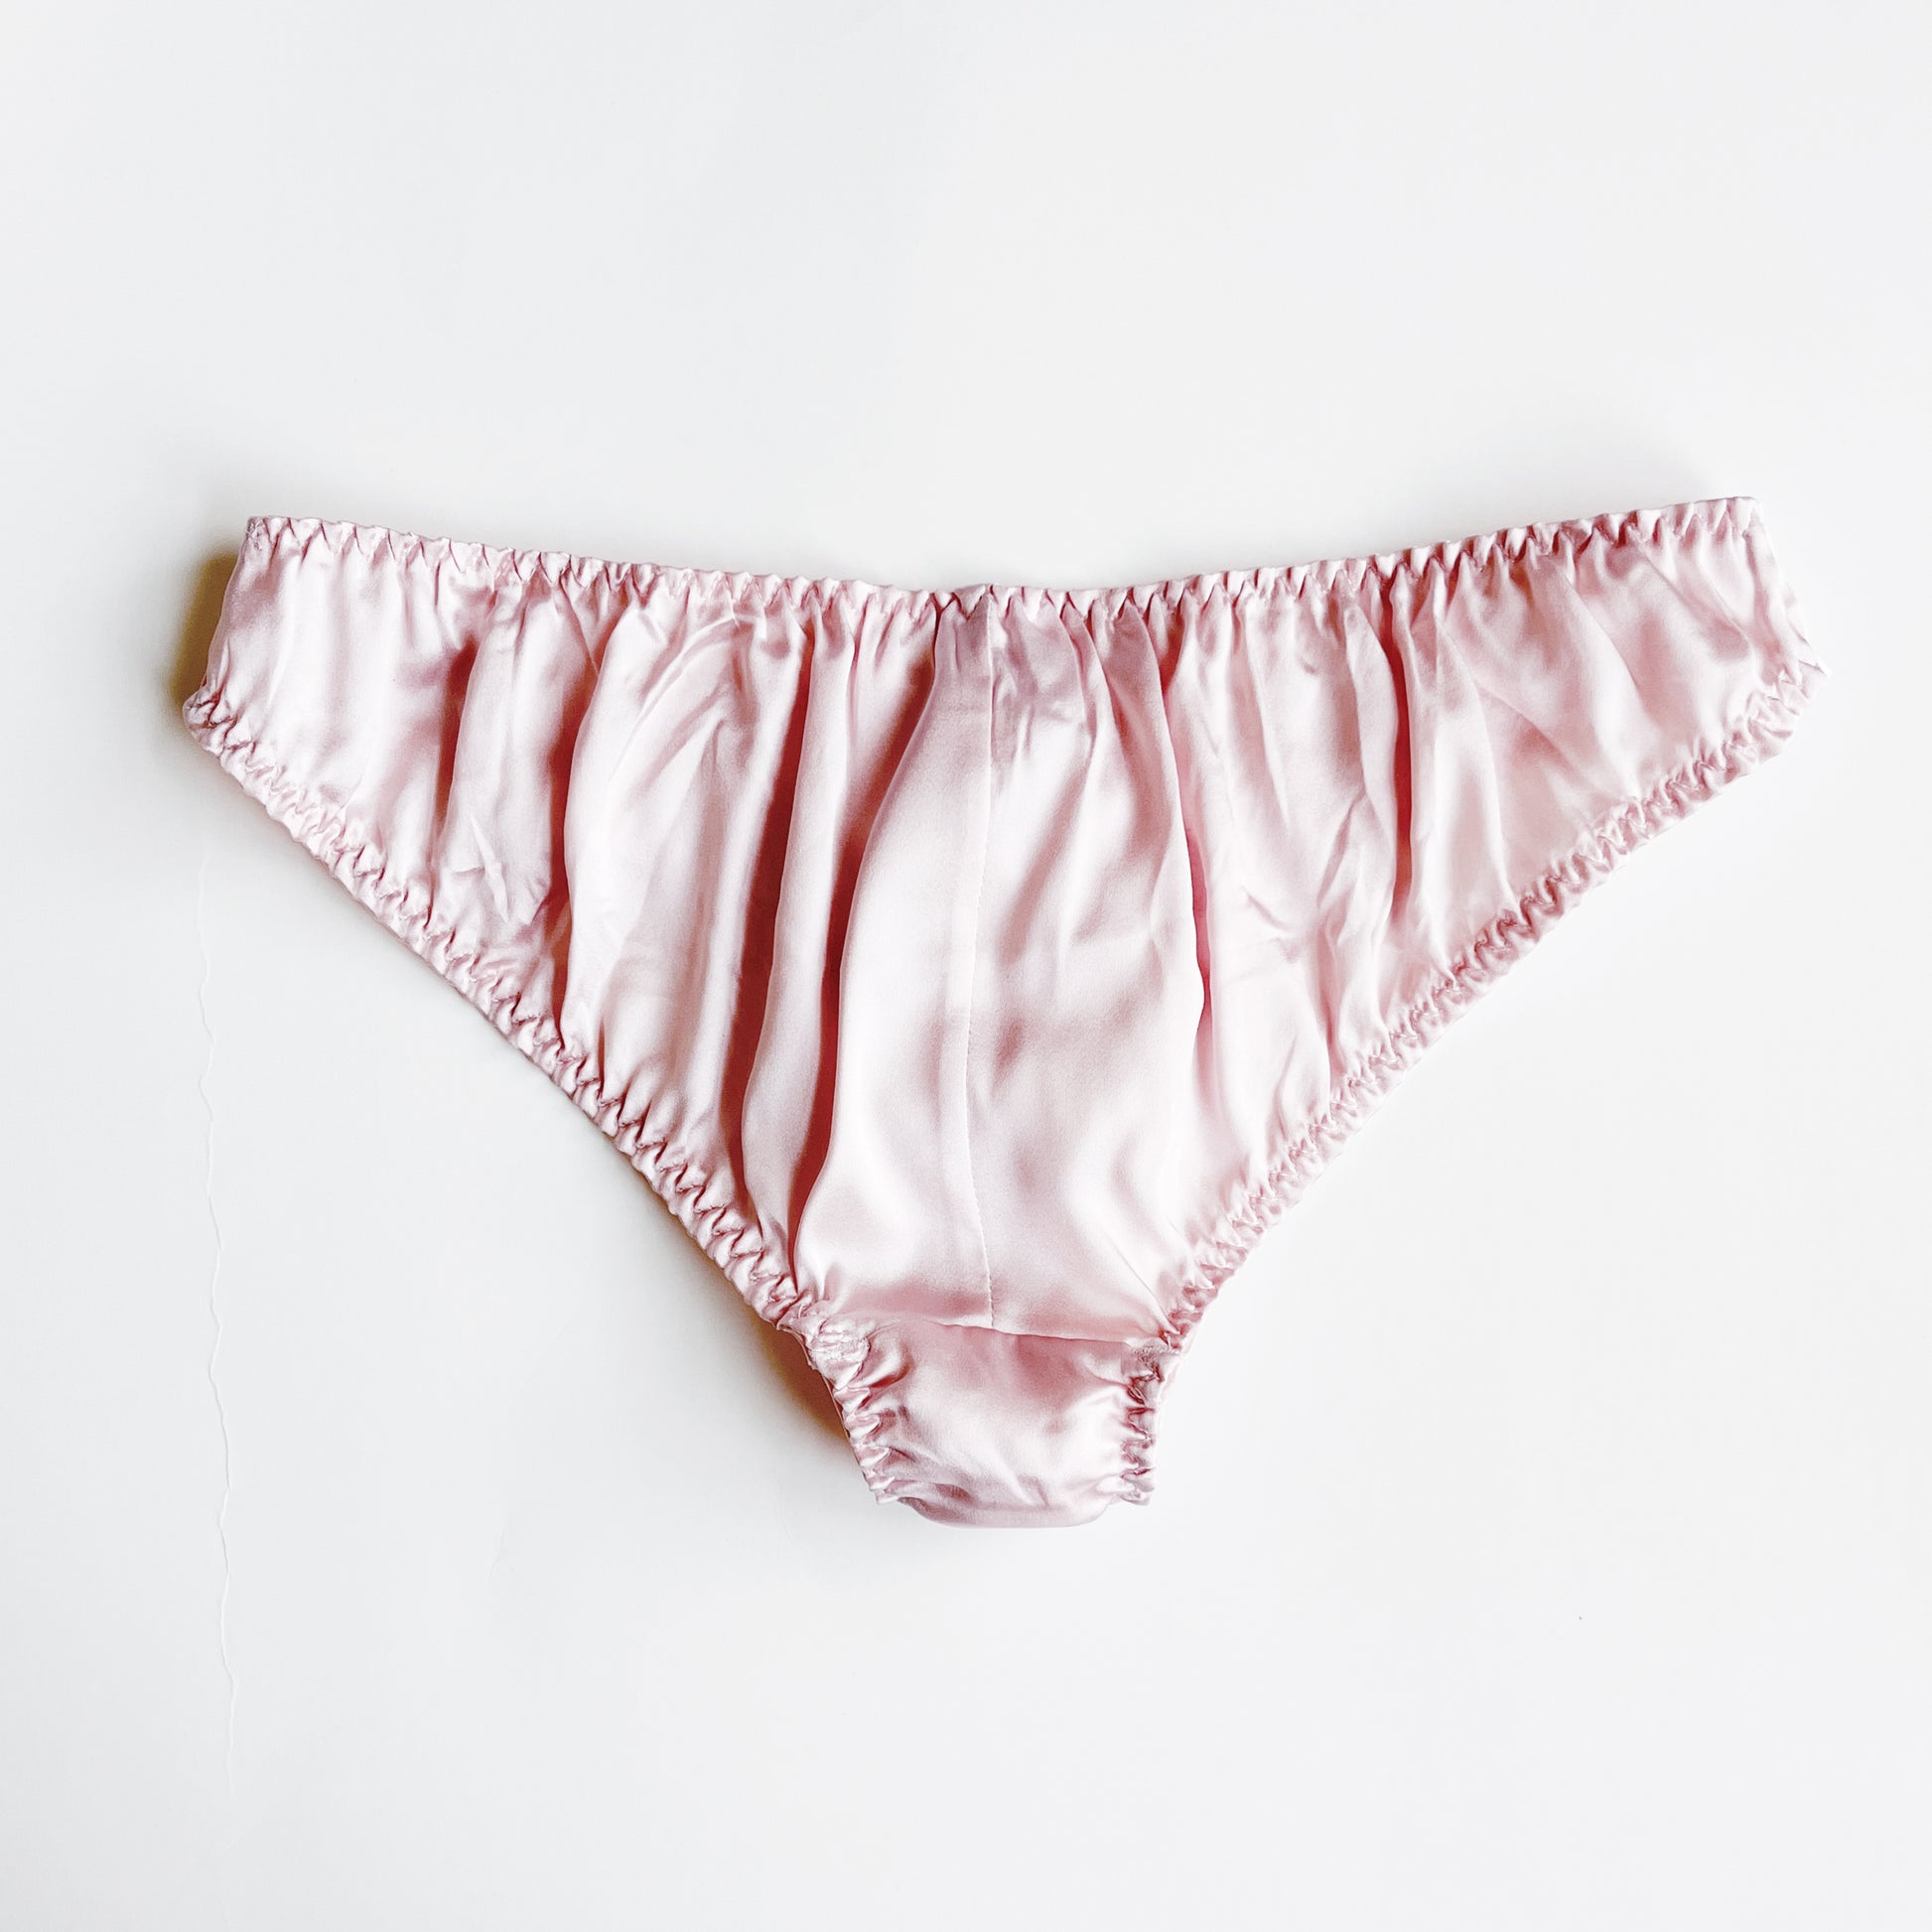 6 Color Women's Mulberry Silk Panties Silk Sexy Bikini Silk Briefs